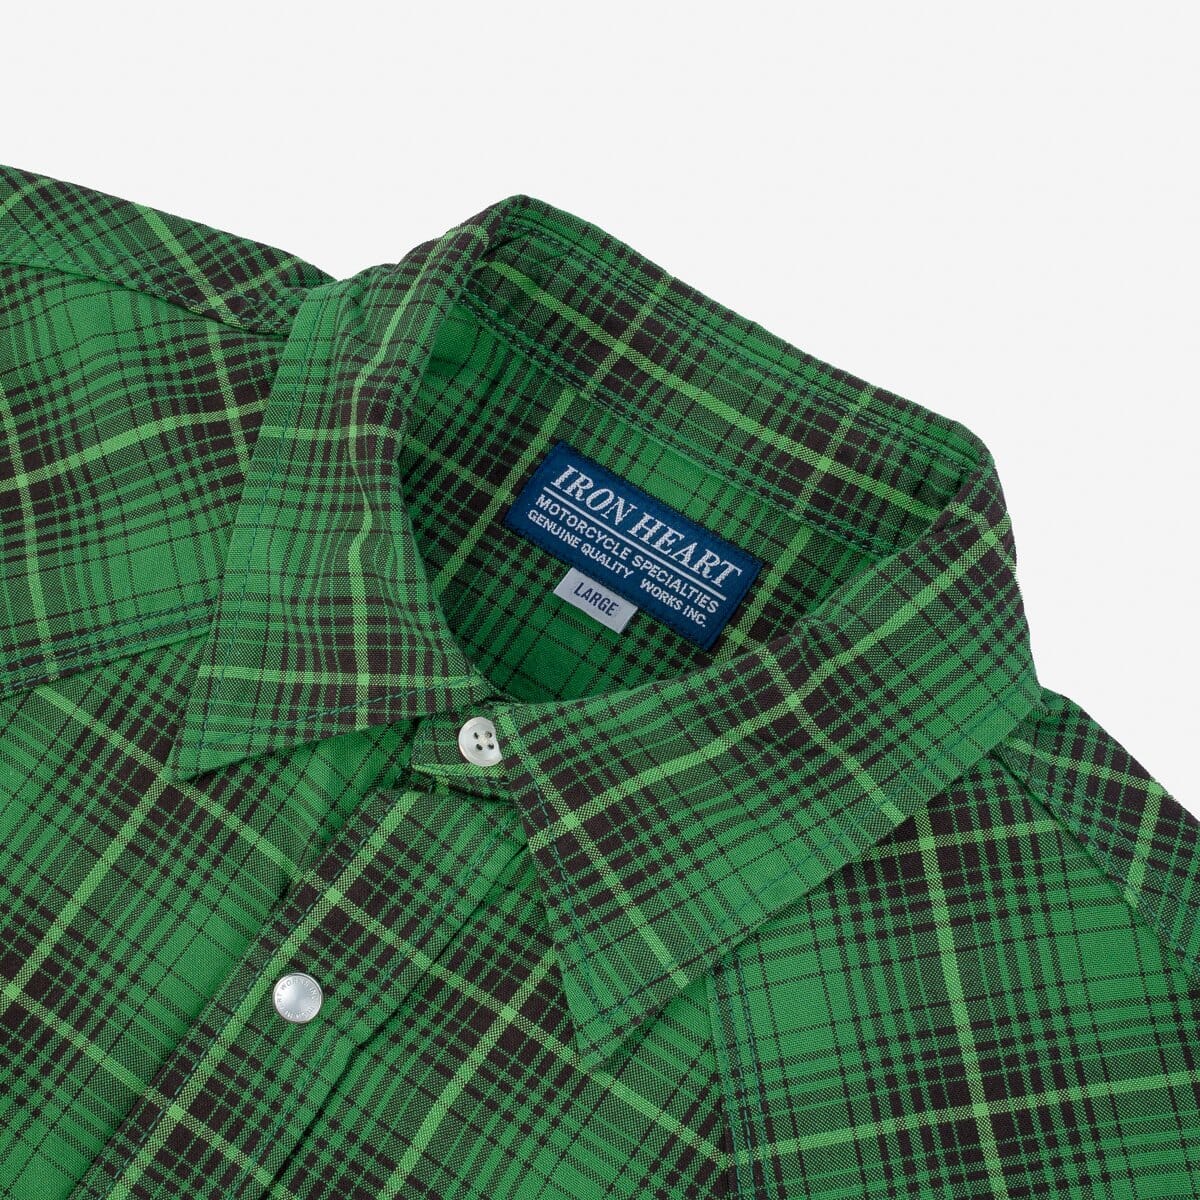 Iron Heart - IHSH-386-GRN - 5oz Selvedge Short Sleeved Western Shirt - Green Vintage Check - City Workshop Men's Supply Co.